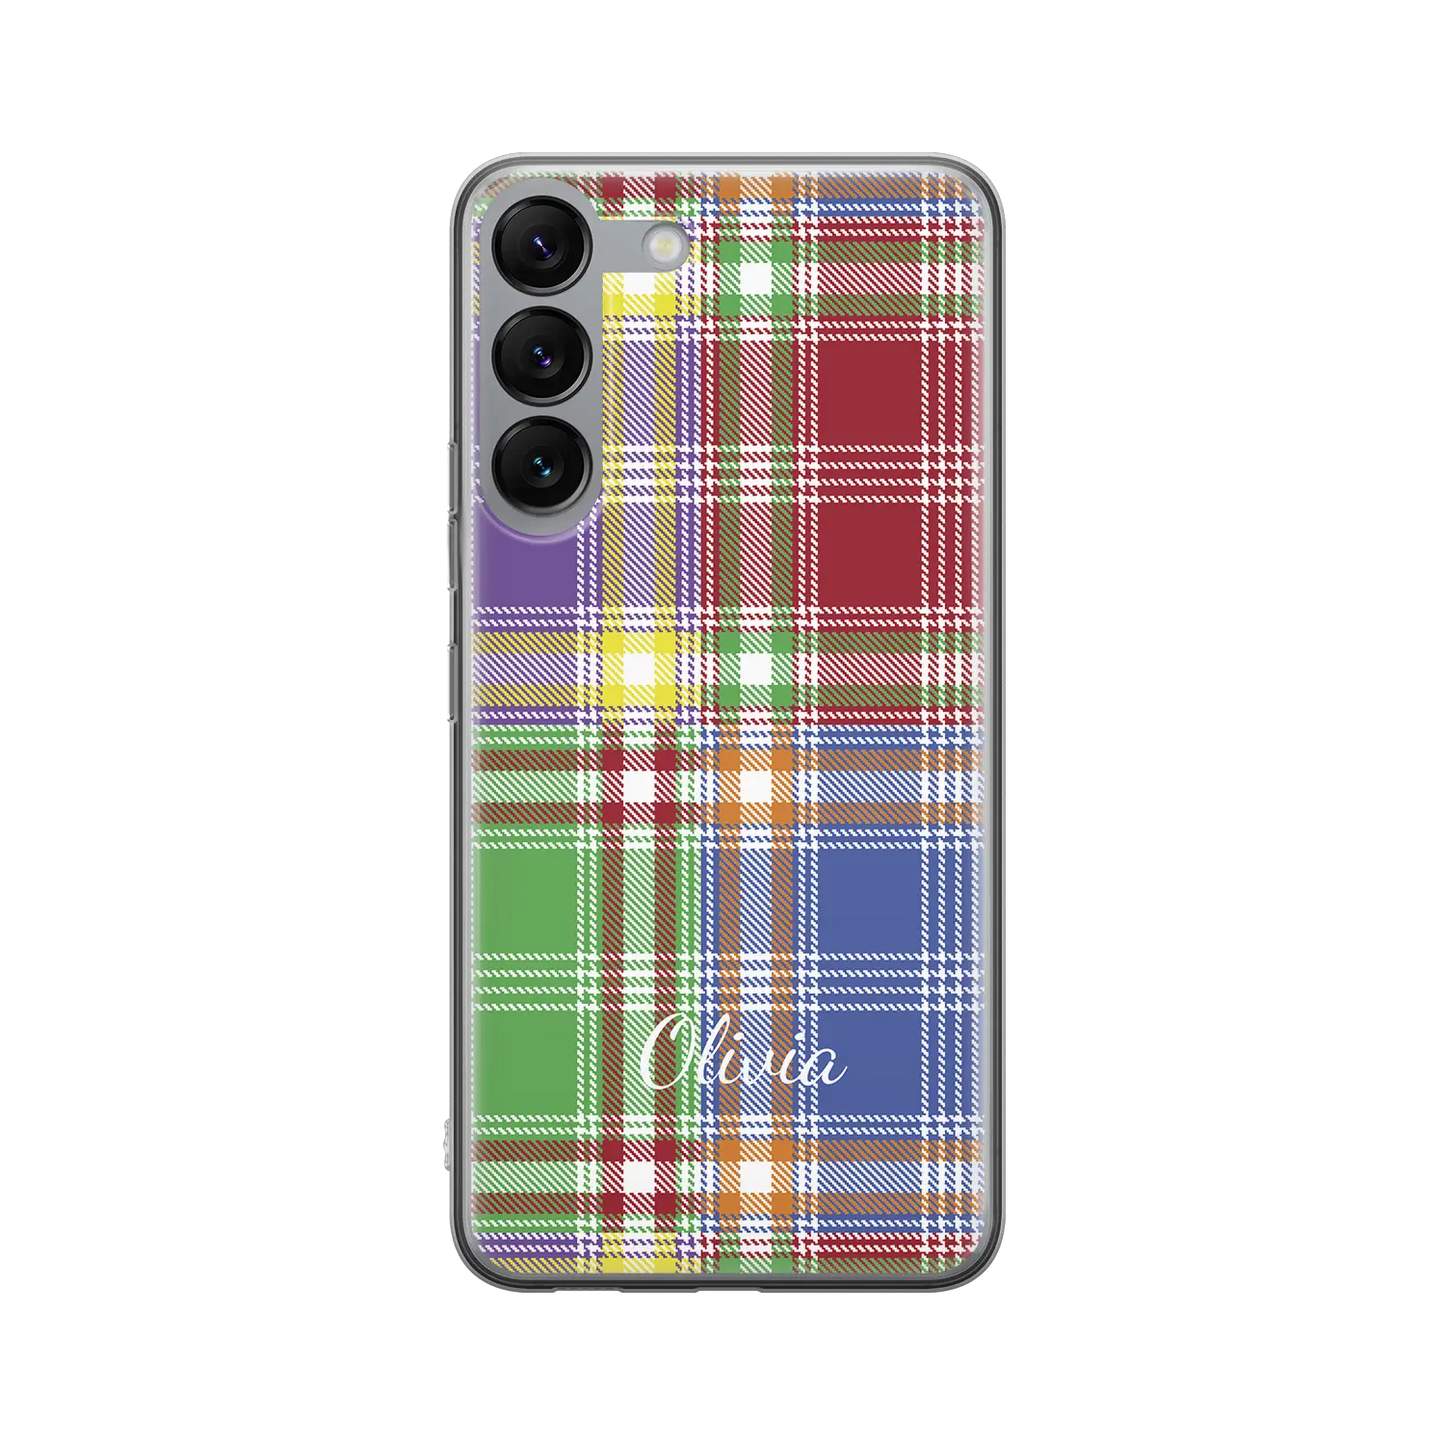 Plaid & Simple - Carcasa personalizada Galaxy S